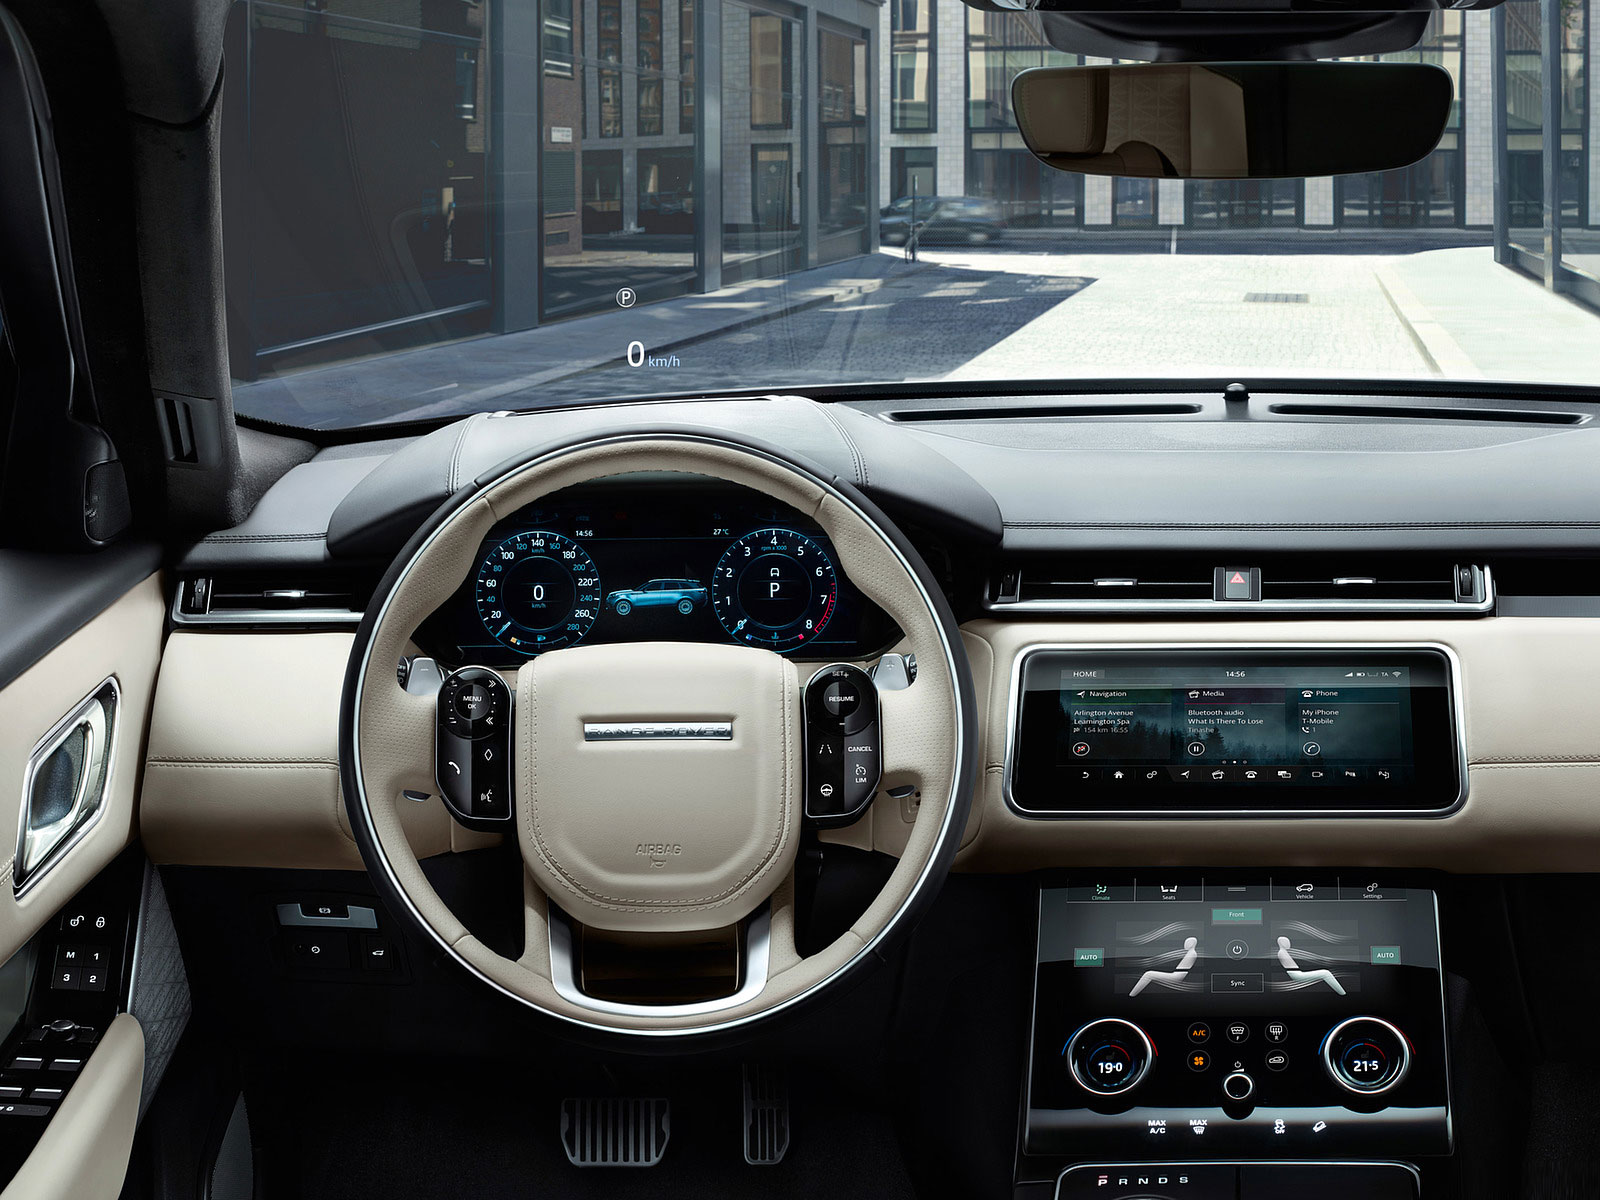 Land Rover Range Rover Velar R-Dynamic interior front Dashboard view